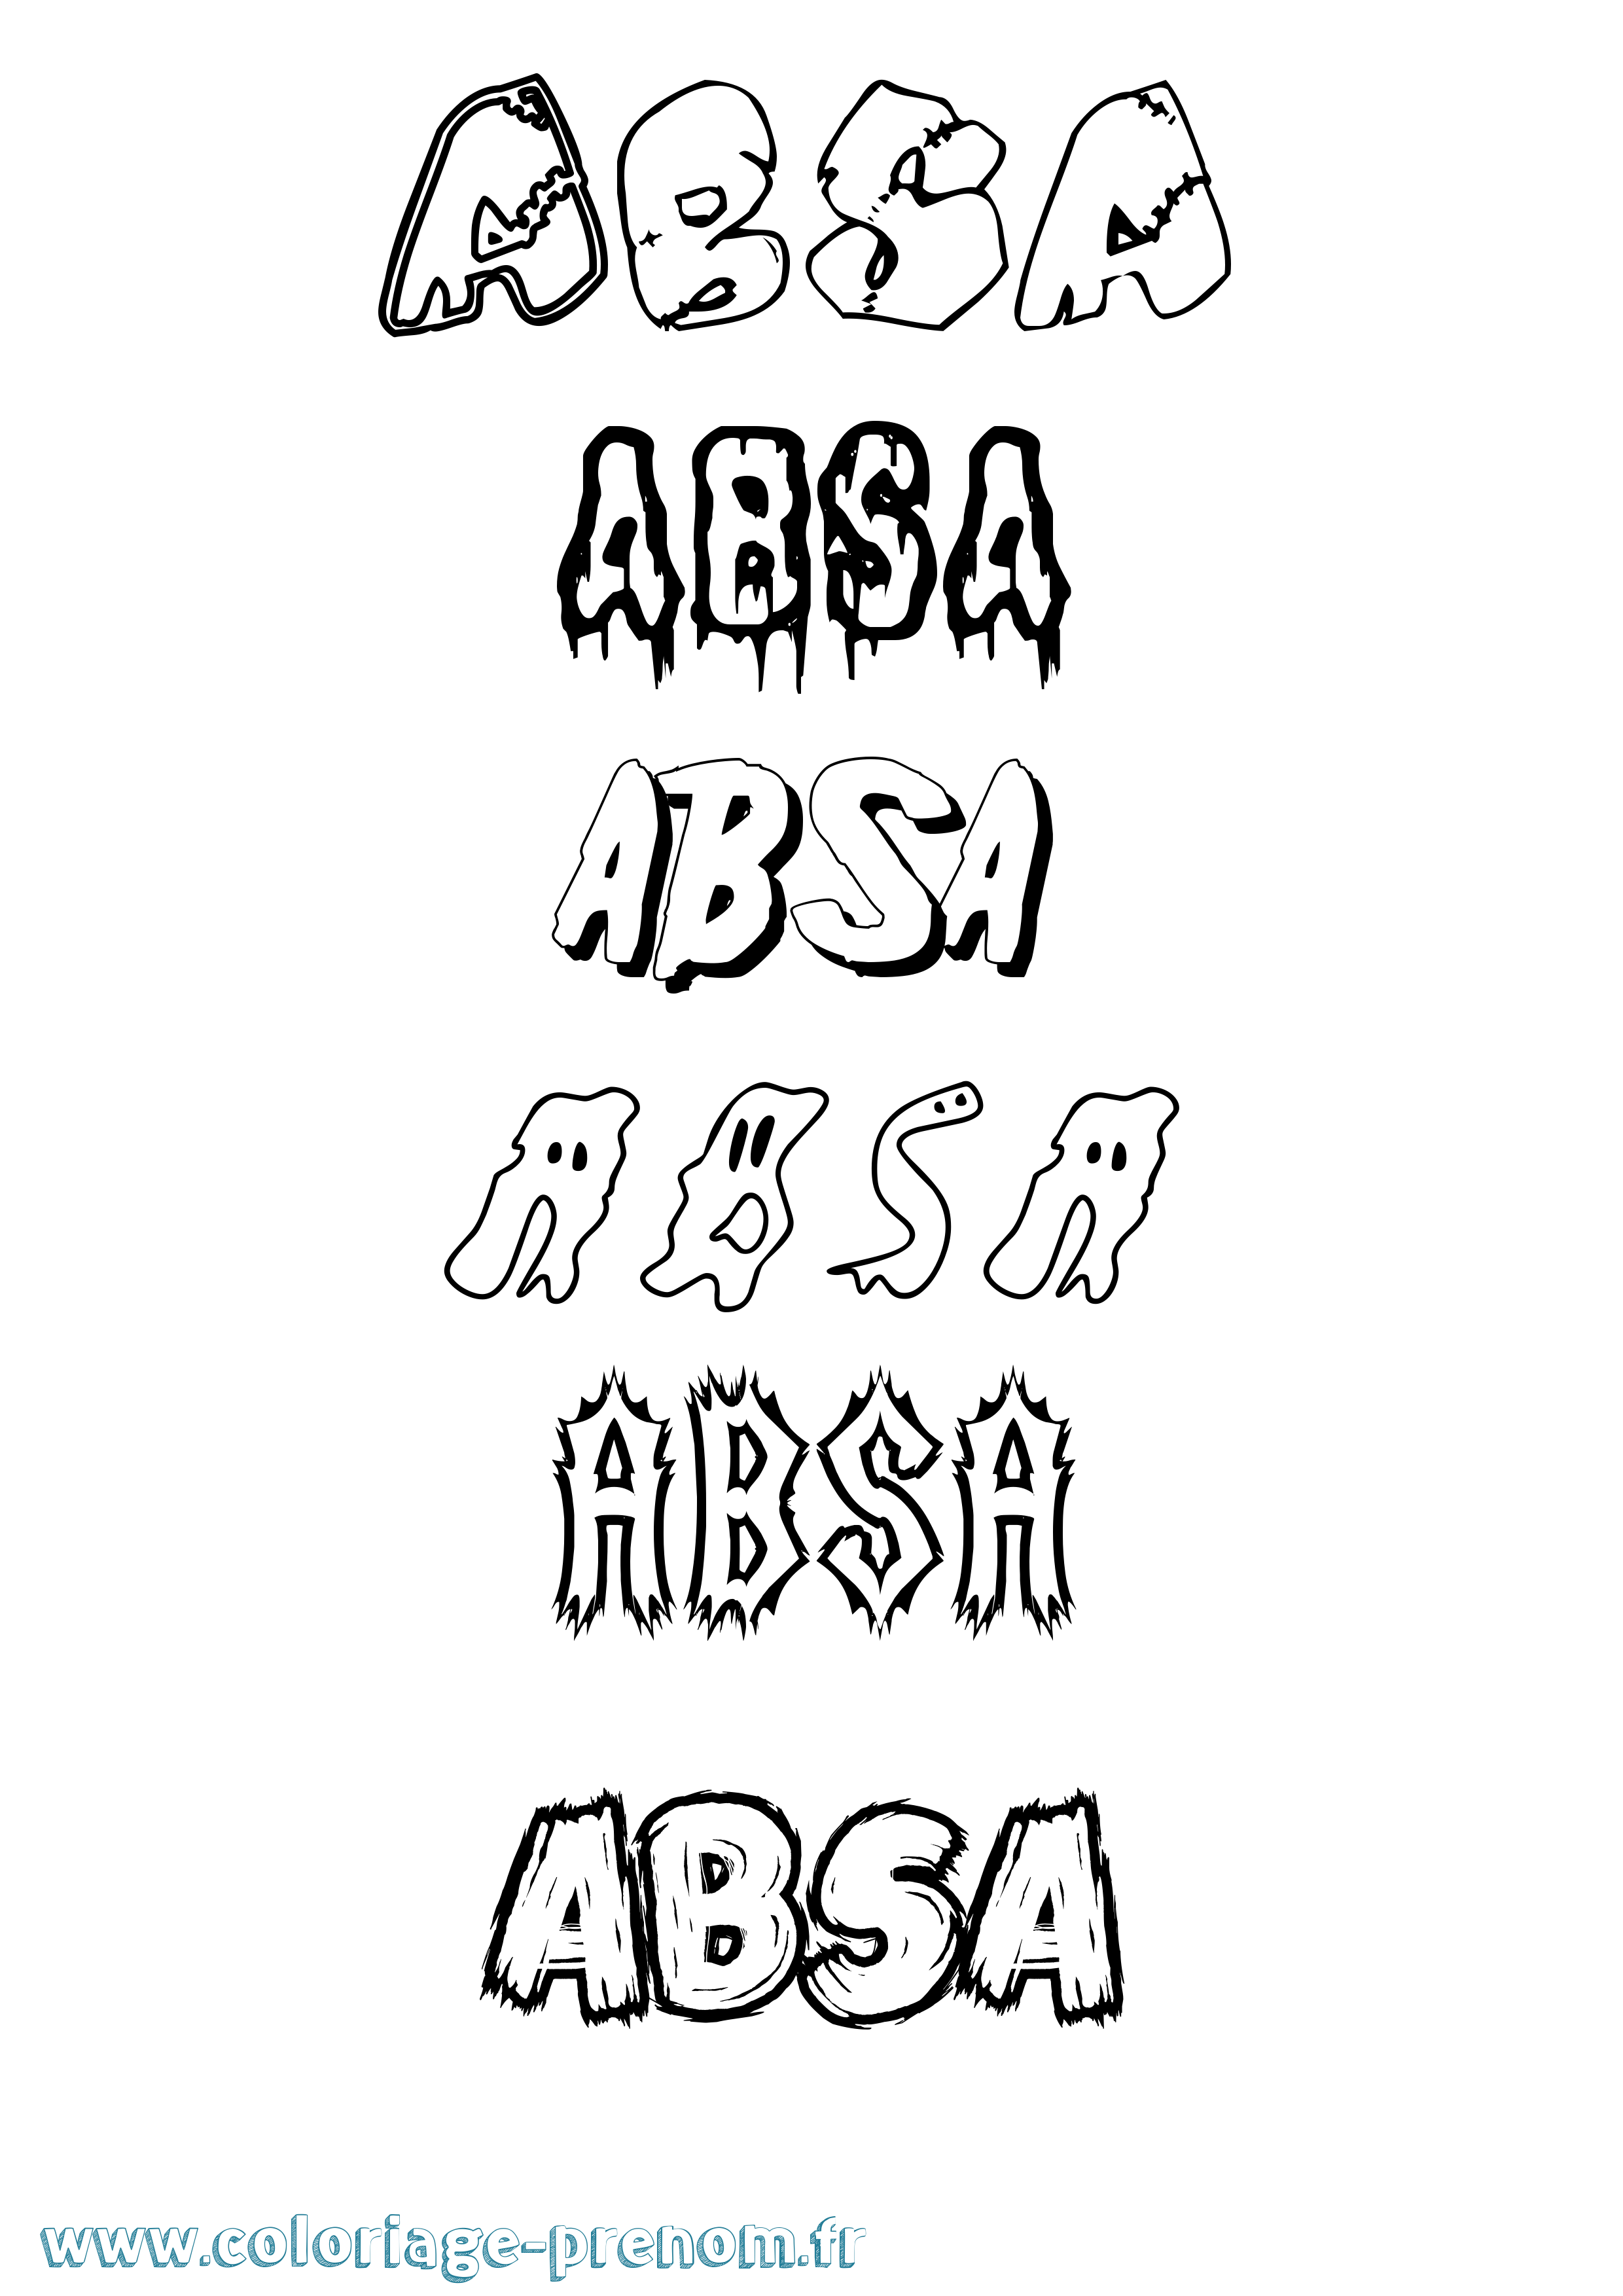 Coloriage prénom Absa Frisson